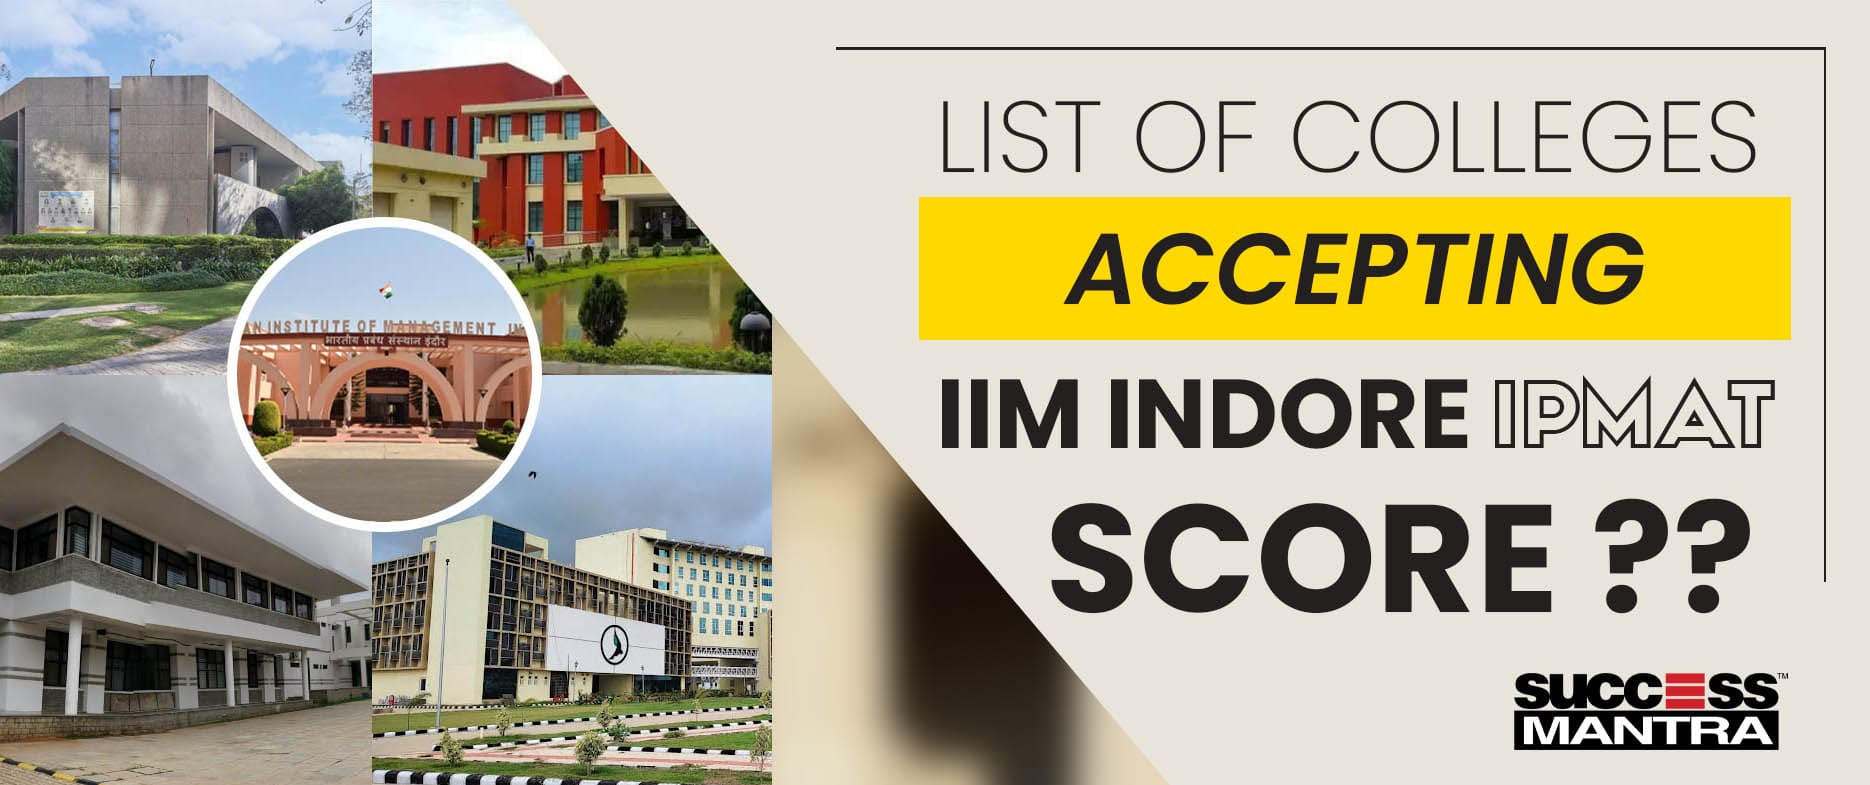 List of Colleges Accepting IIM, Indore, IPMAT Score